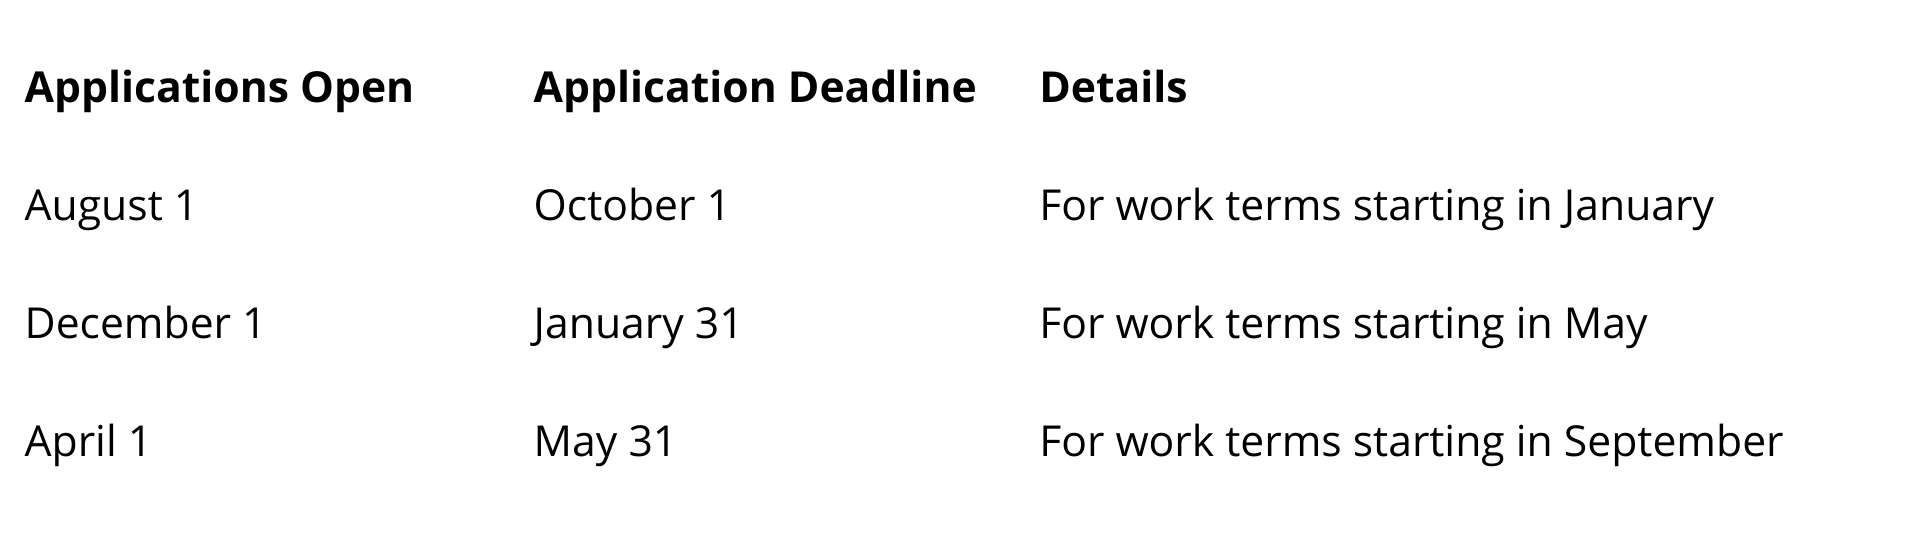 application-deadlines.png